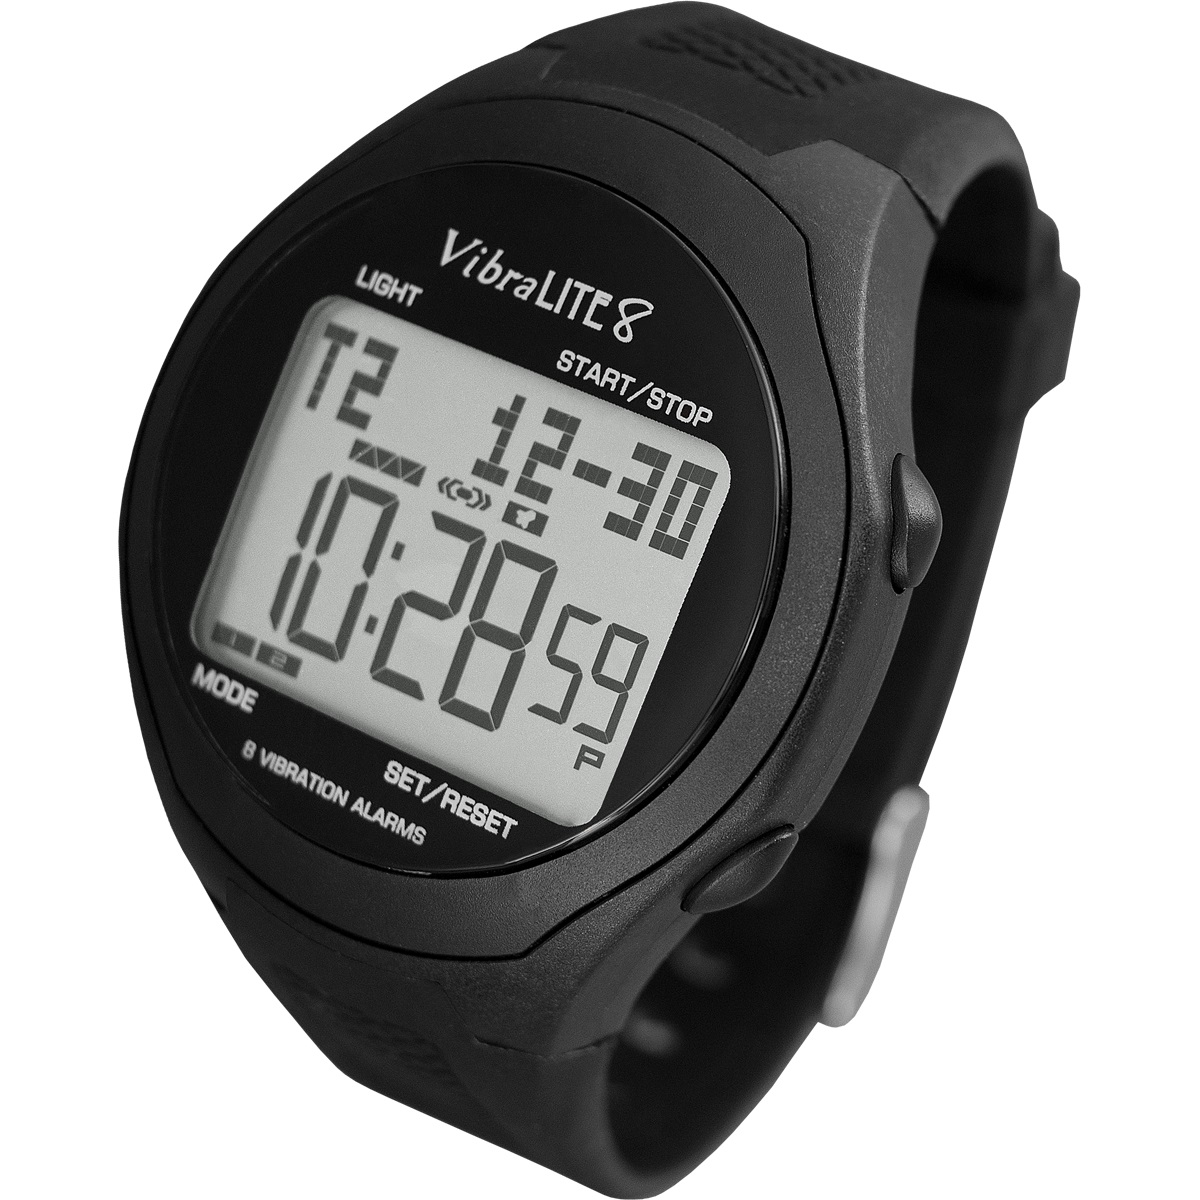 Vibralite 8 Vibrating Watch Alarm 2